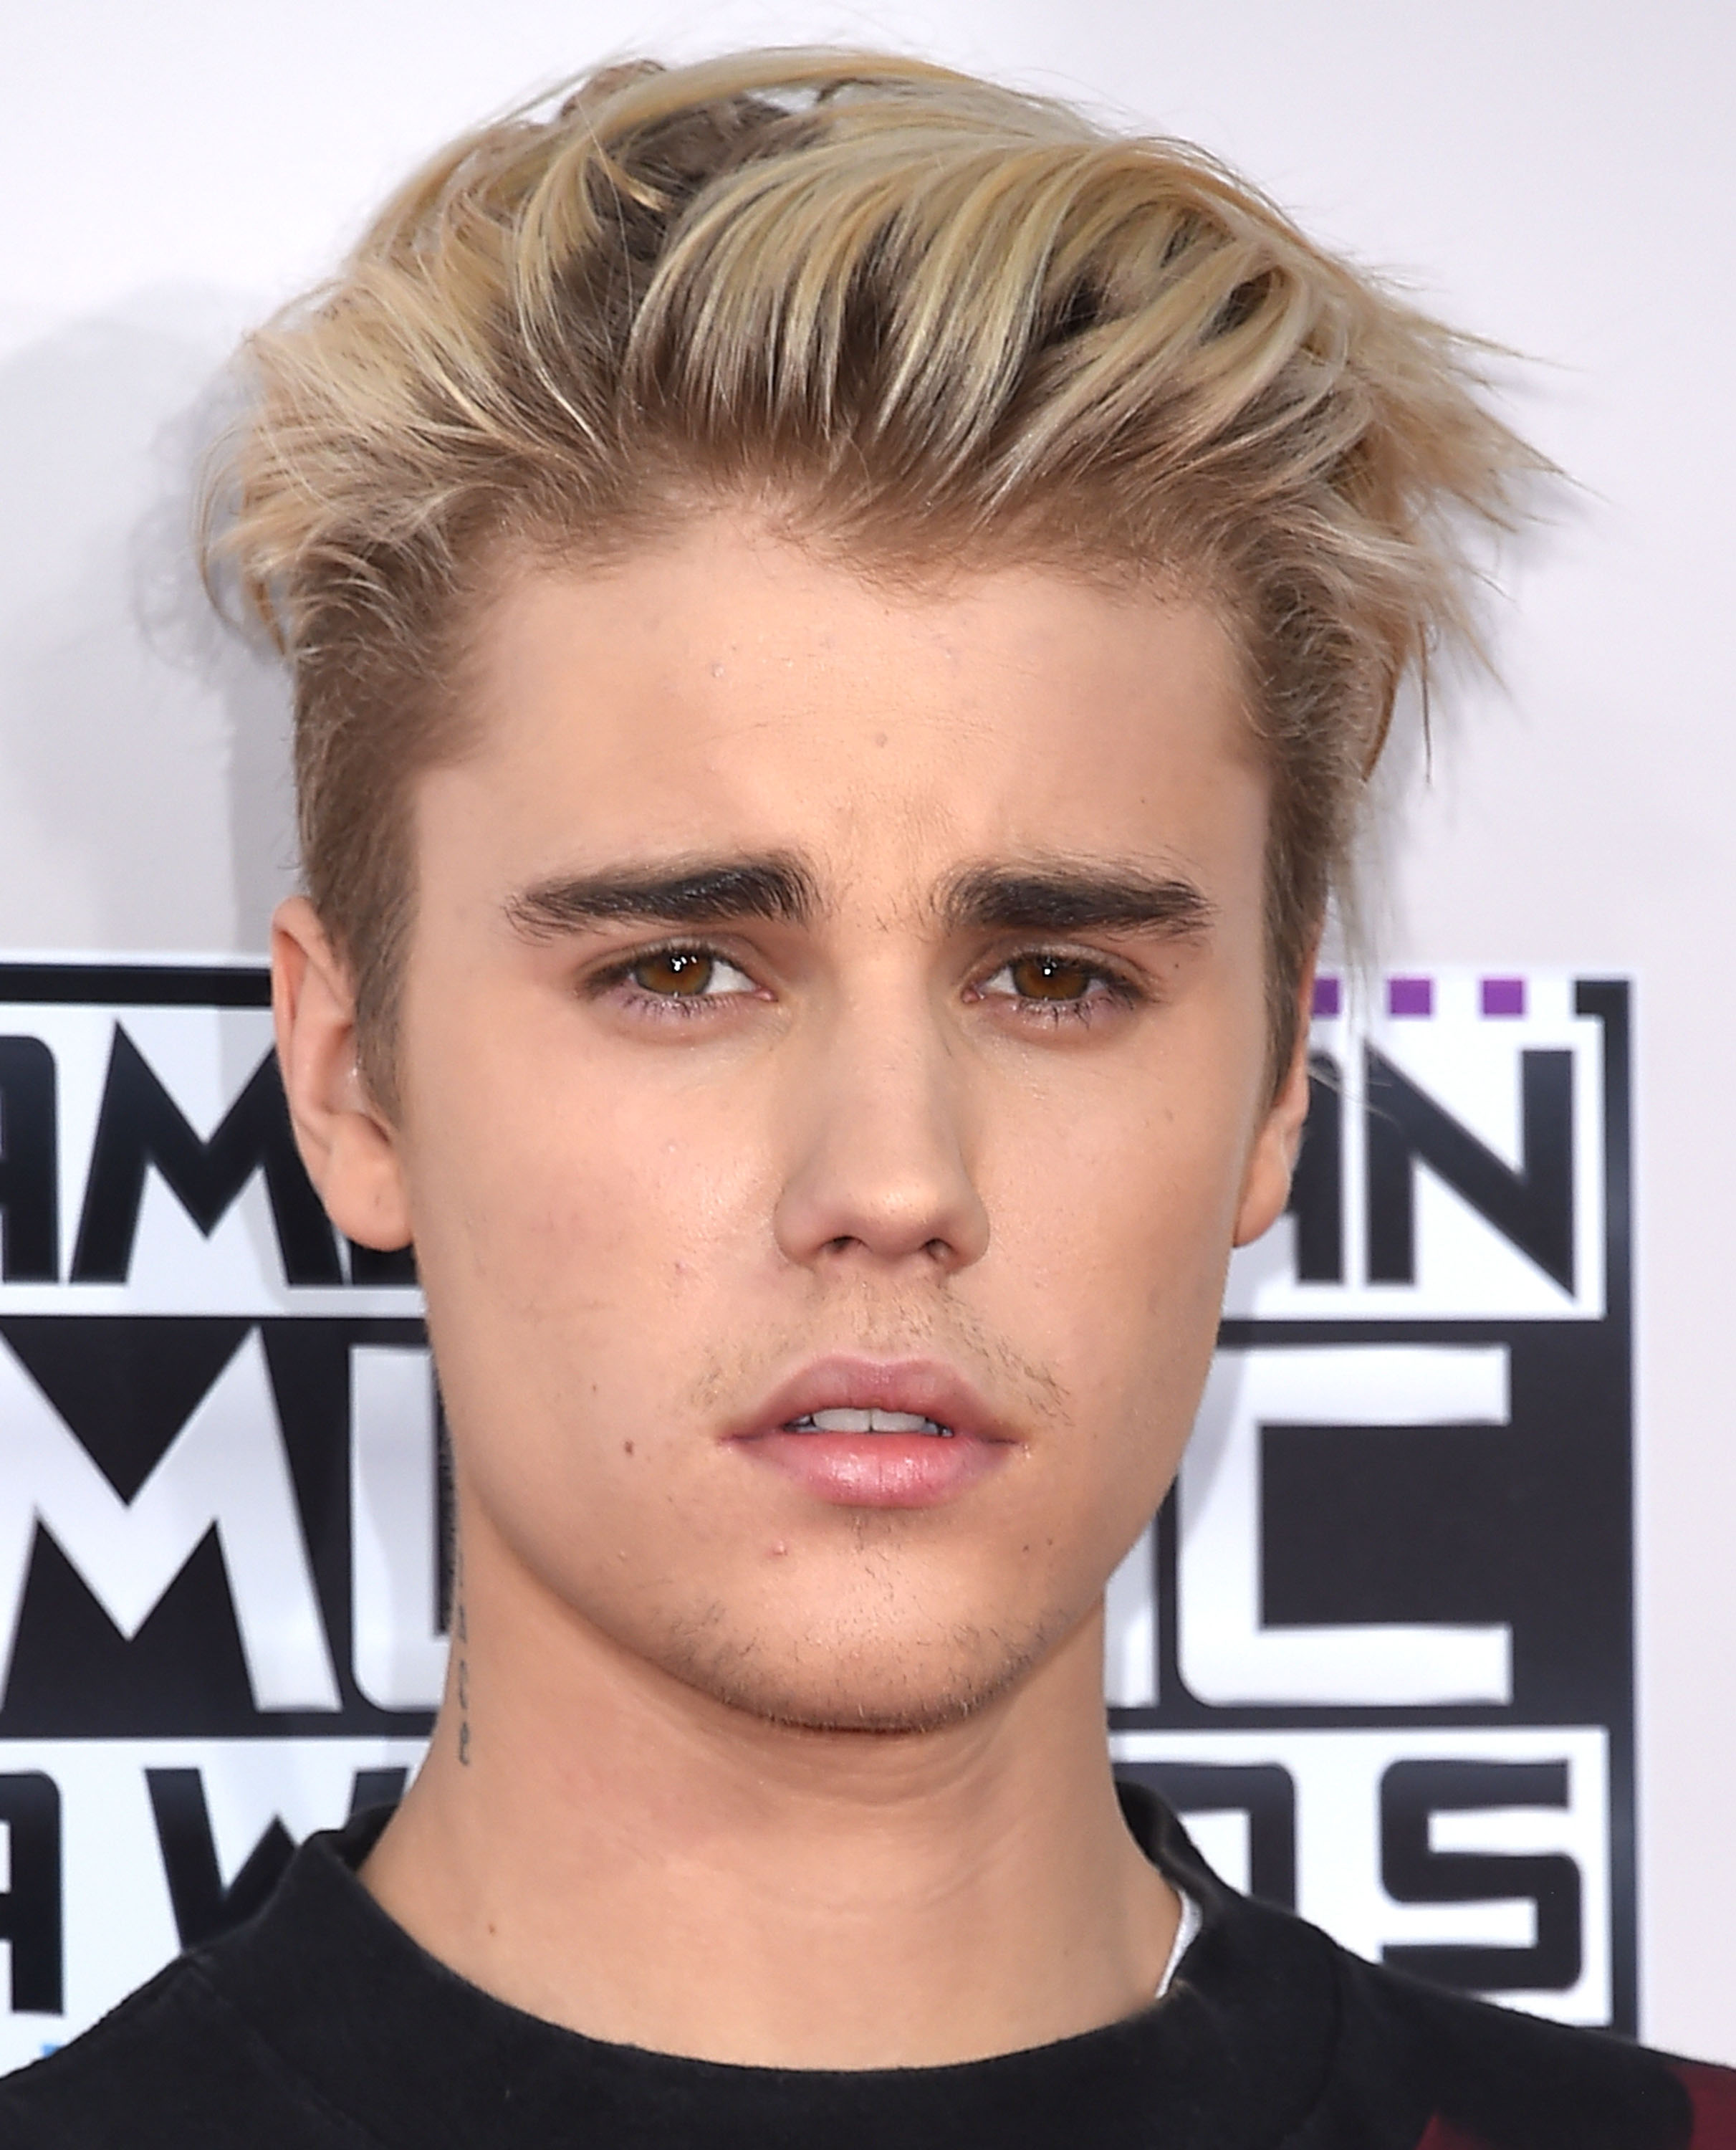 Justin Bieber Debuts Teen Heartthrob Hair, Wears Hair in Center Part